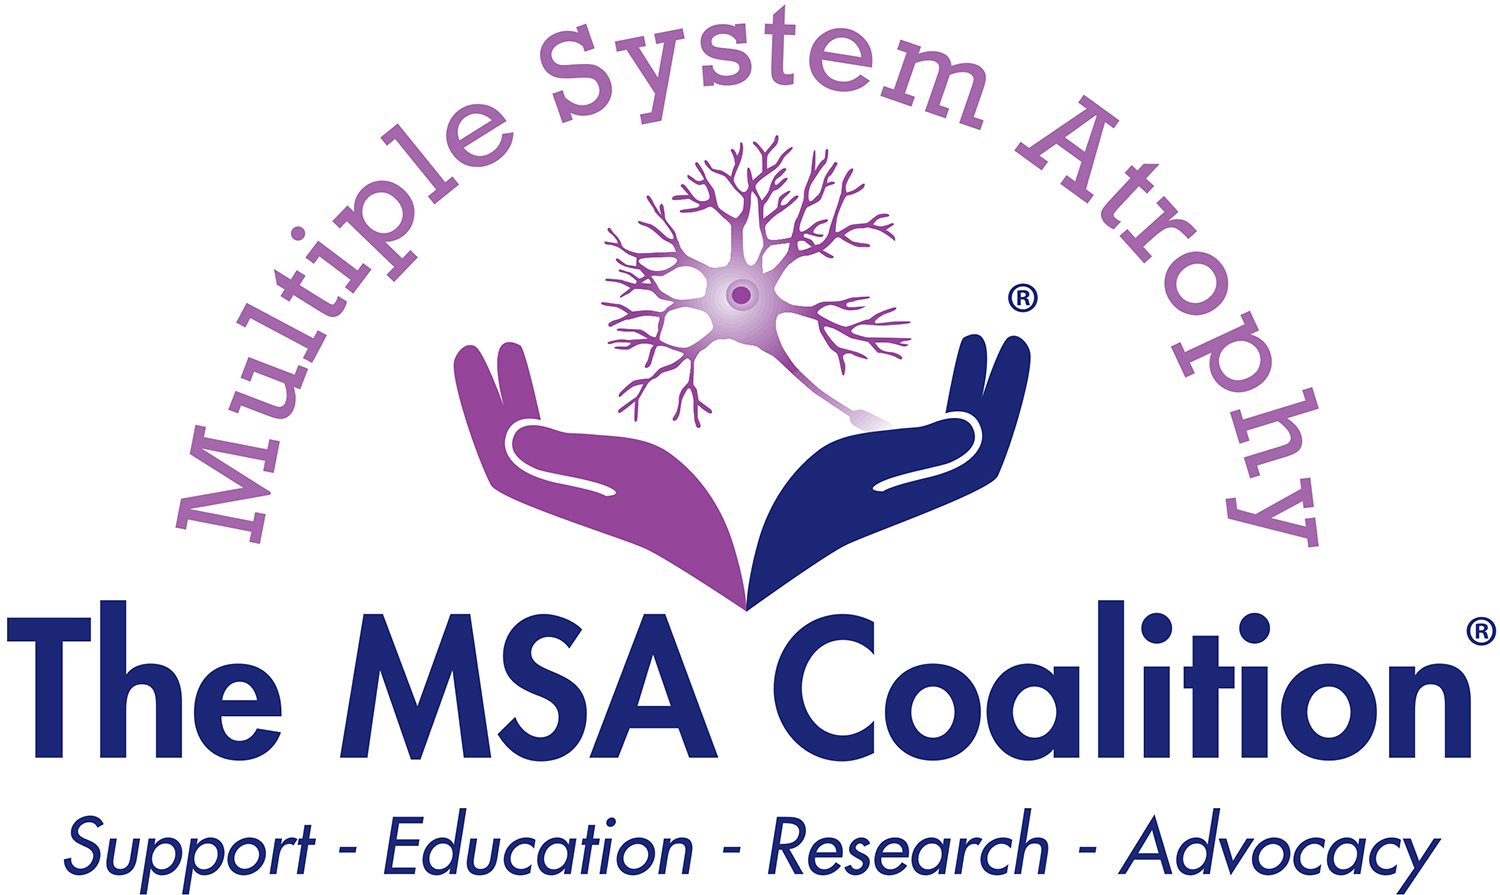 The MSA Coalition